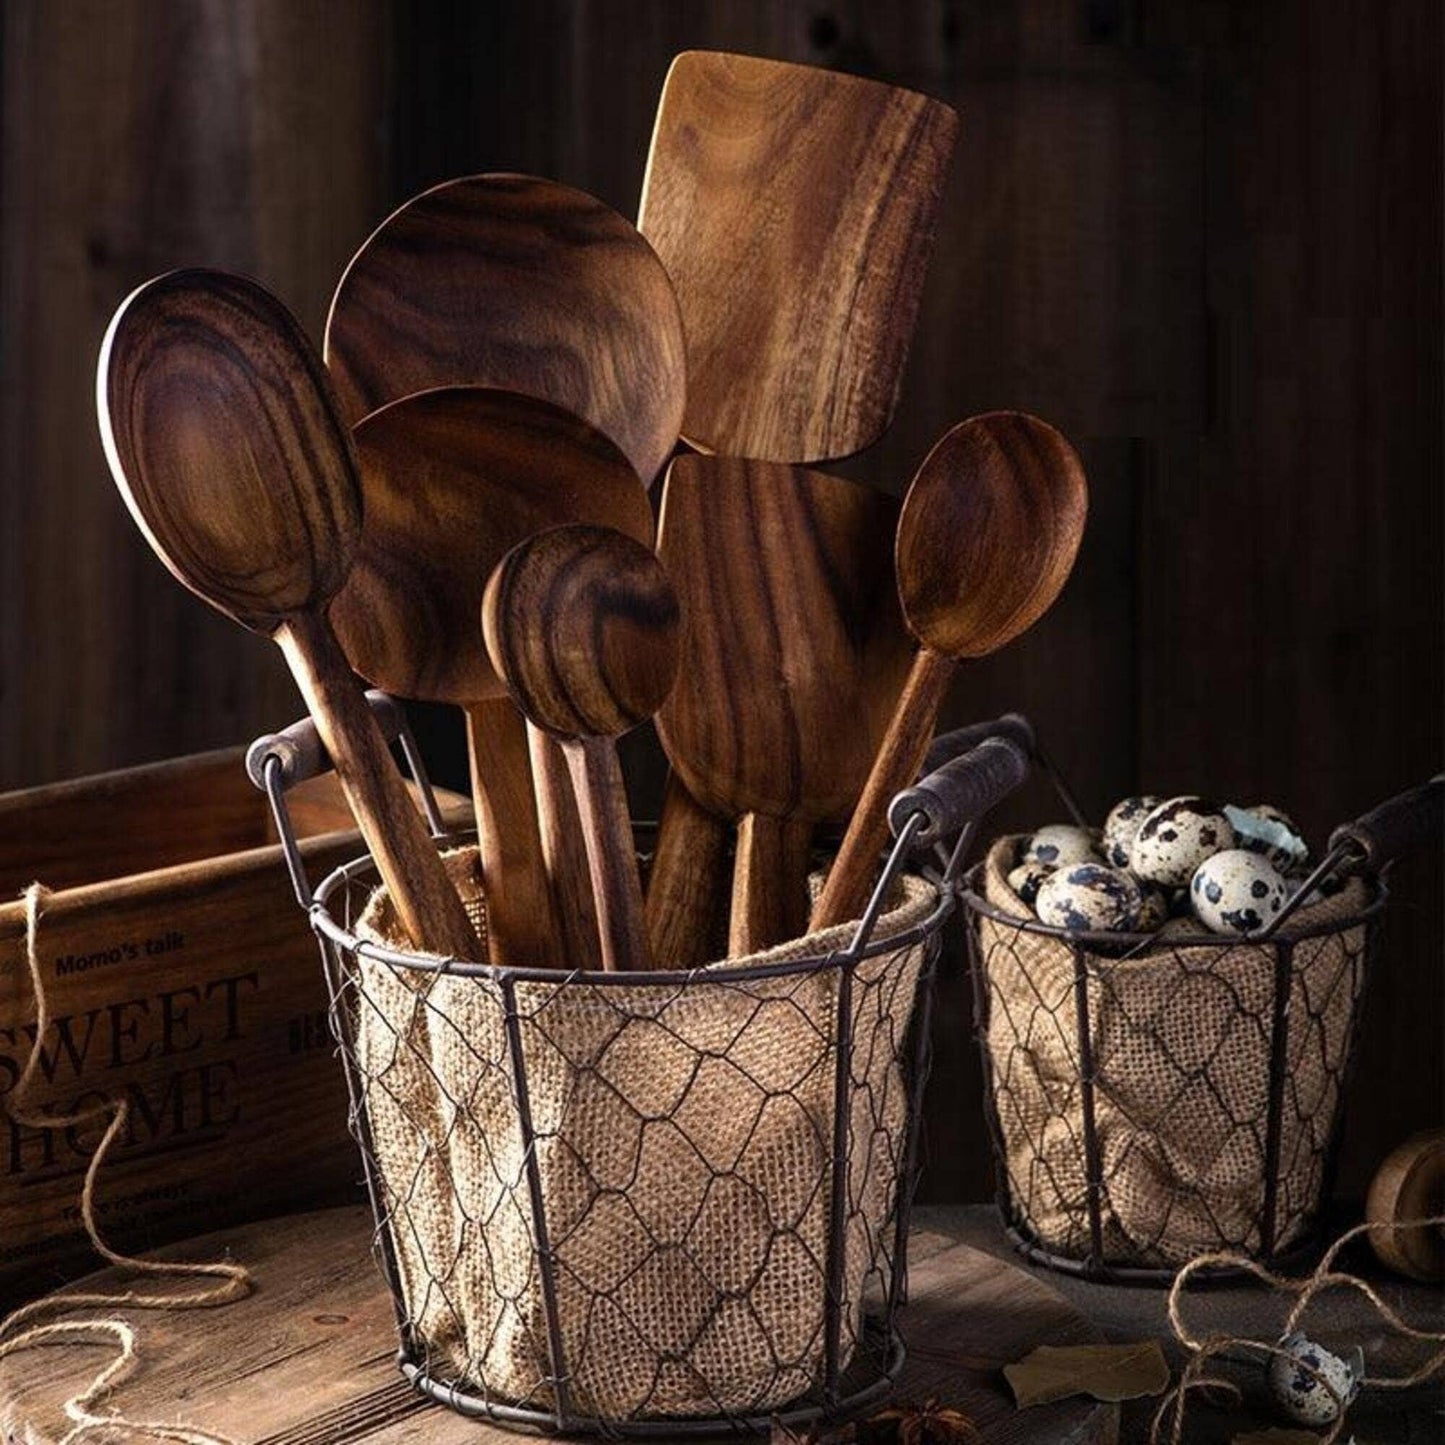 Long Handle Wooden Spoon | Teak